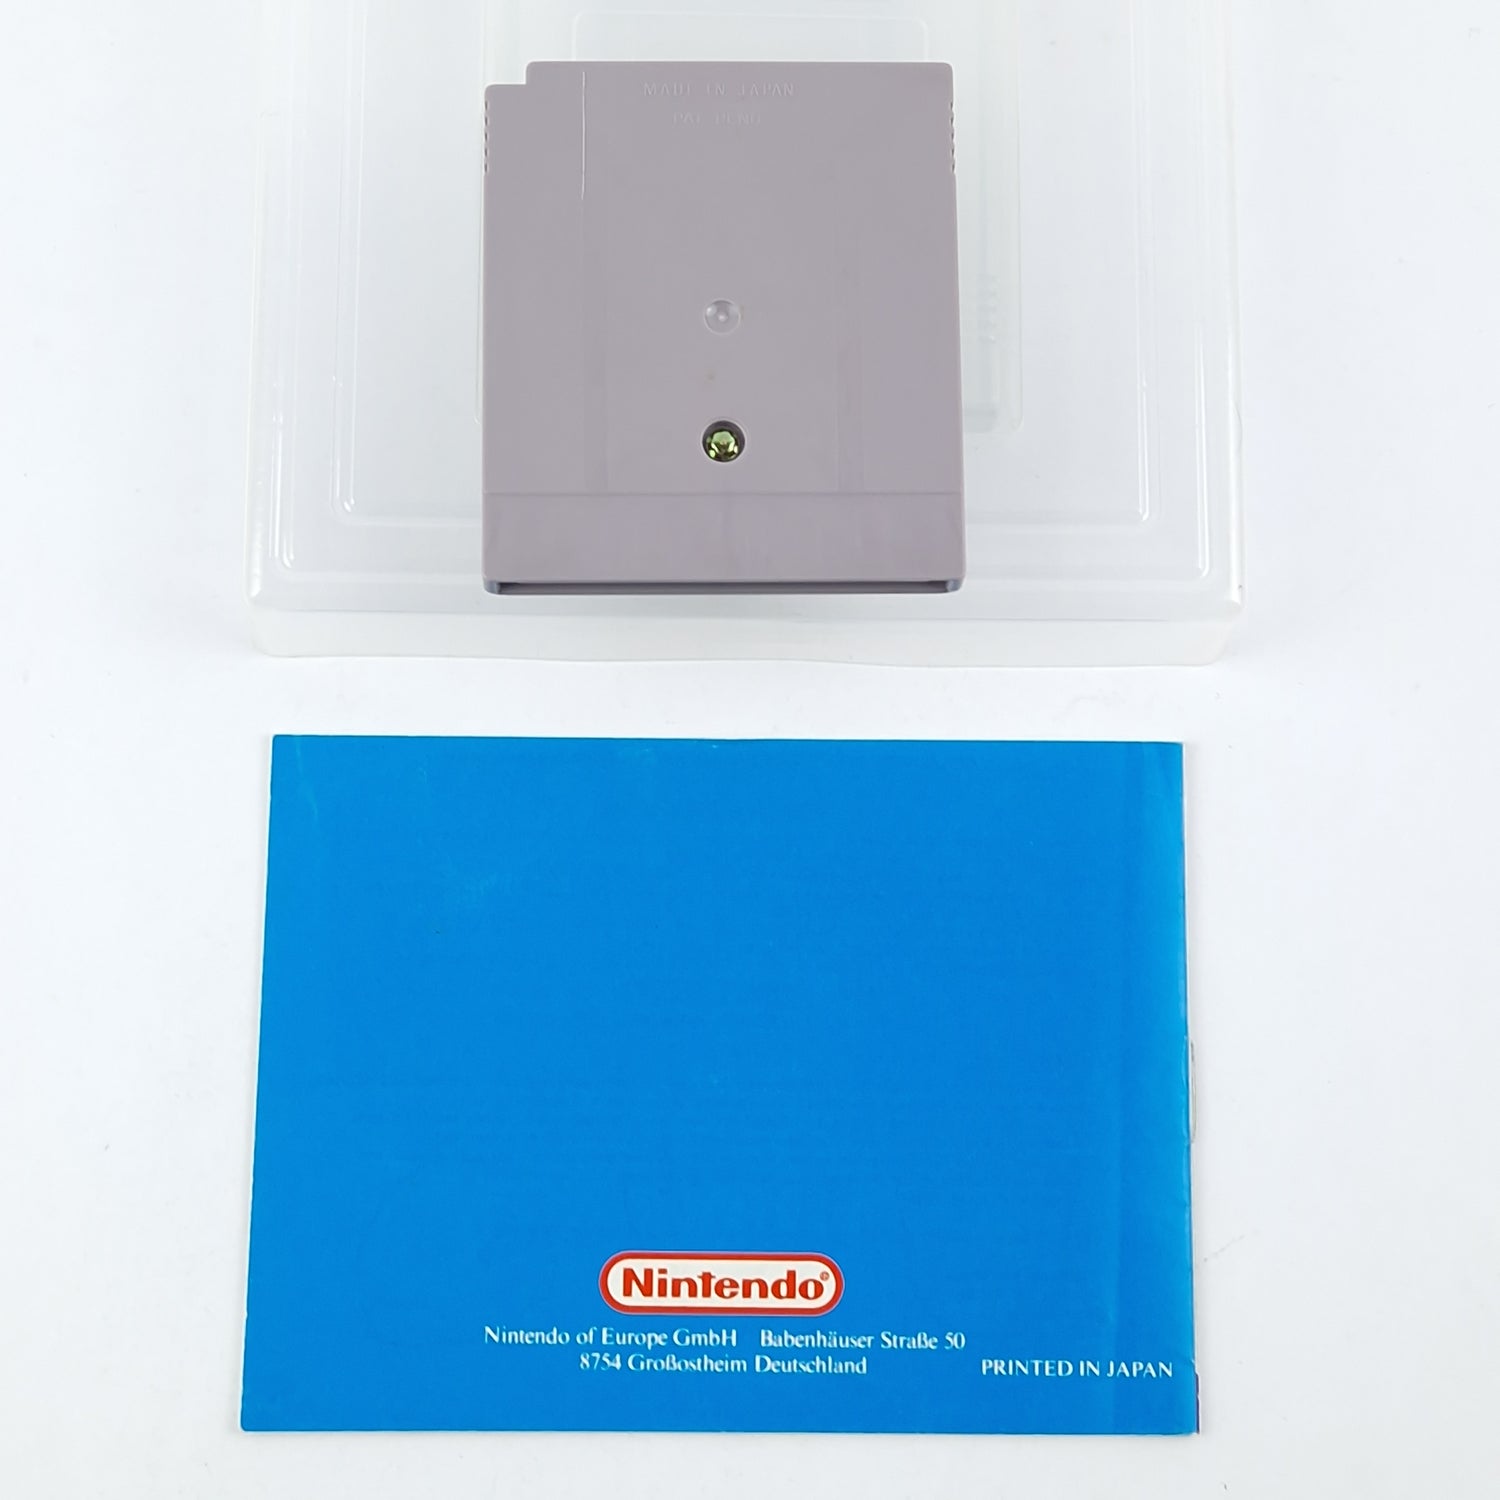 Nintendo Game Boy Spiel : Kirbys Dream Land - Modul Anleitung OVP cib / GAMEBOY